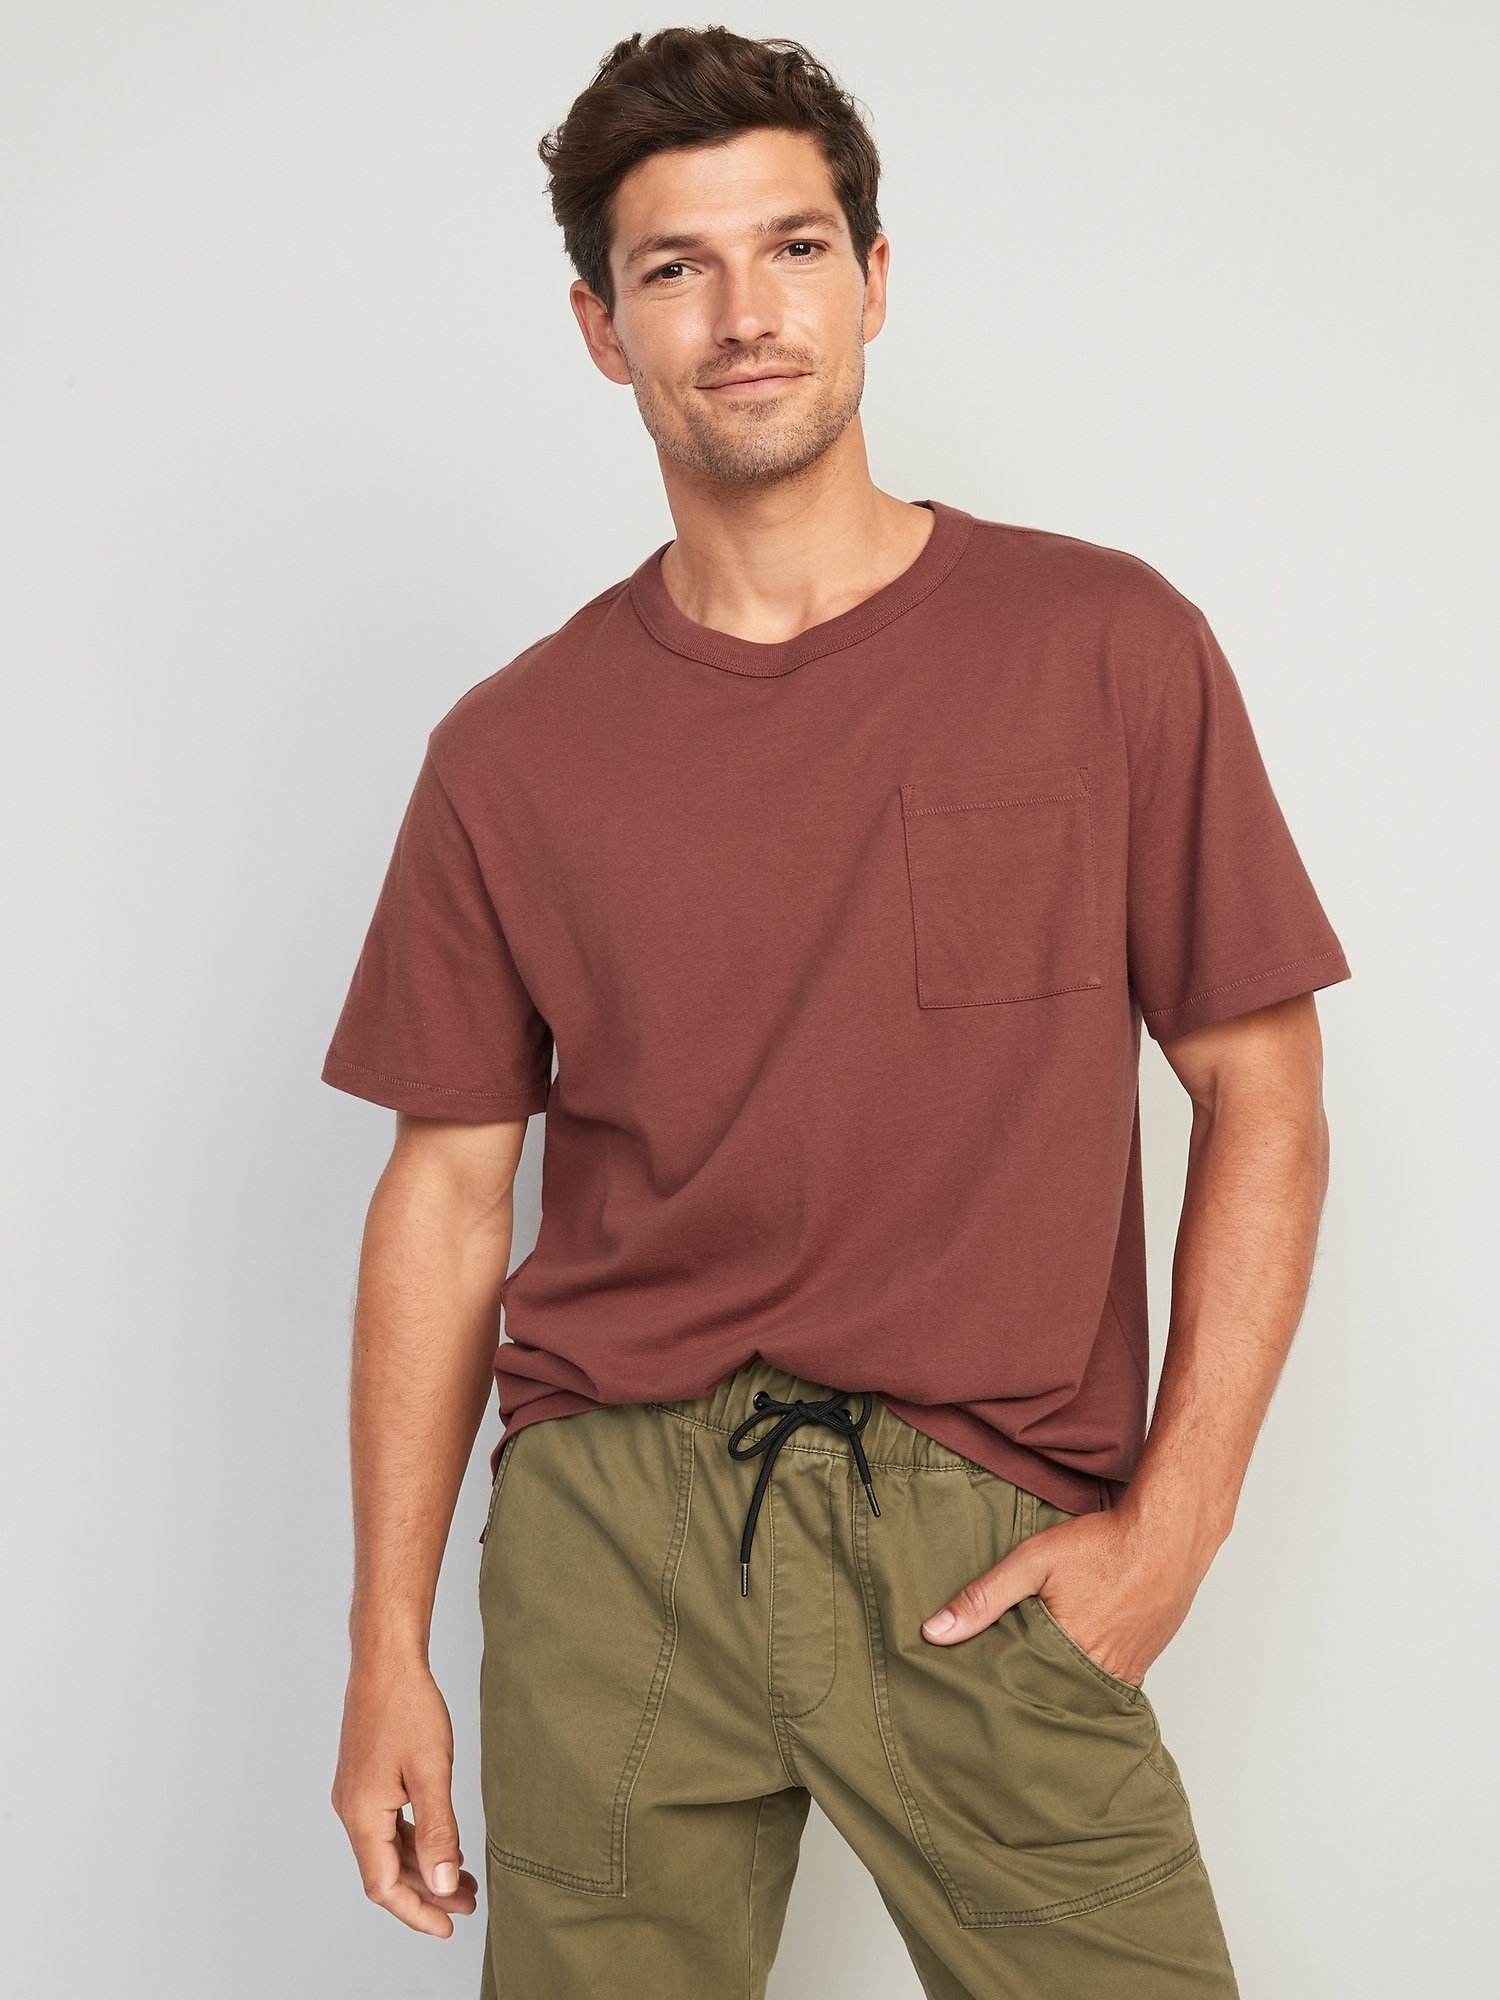 Men's Loose Fit T-Shirts